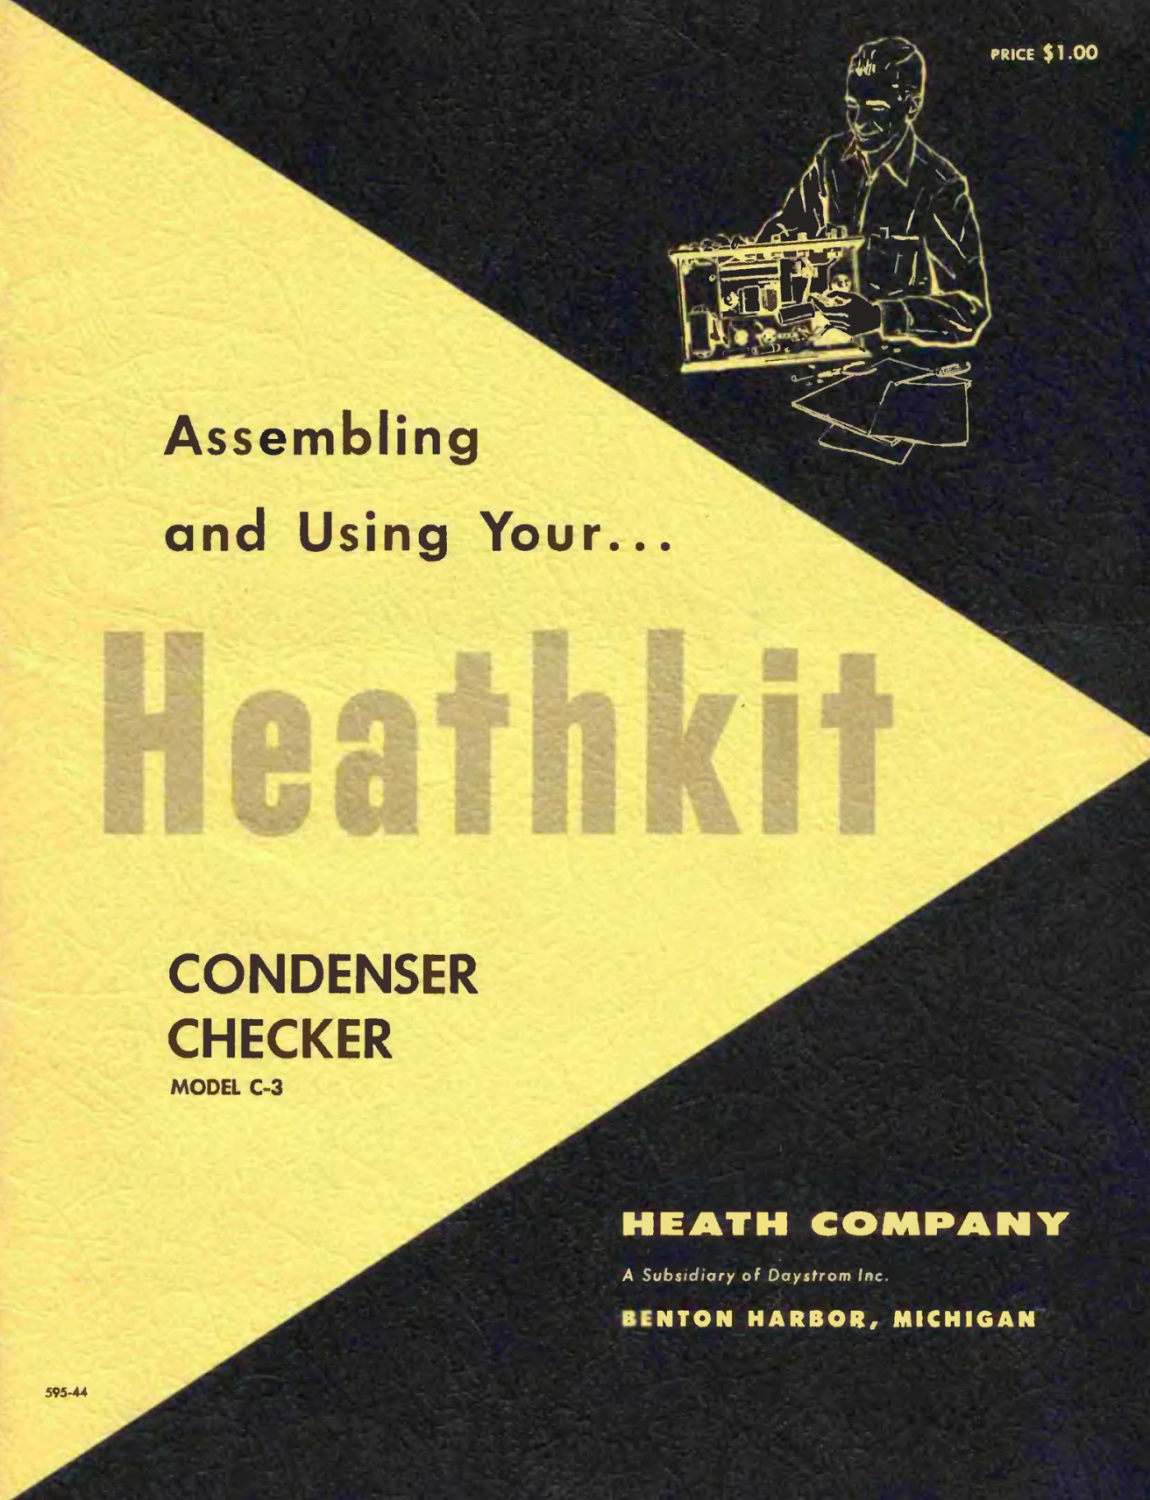 Heathkit C-3 Condenser Checker - Assembly Instructions